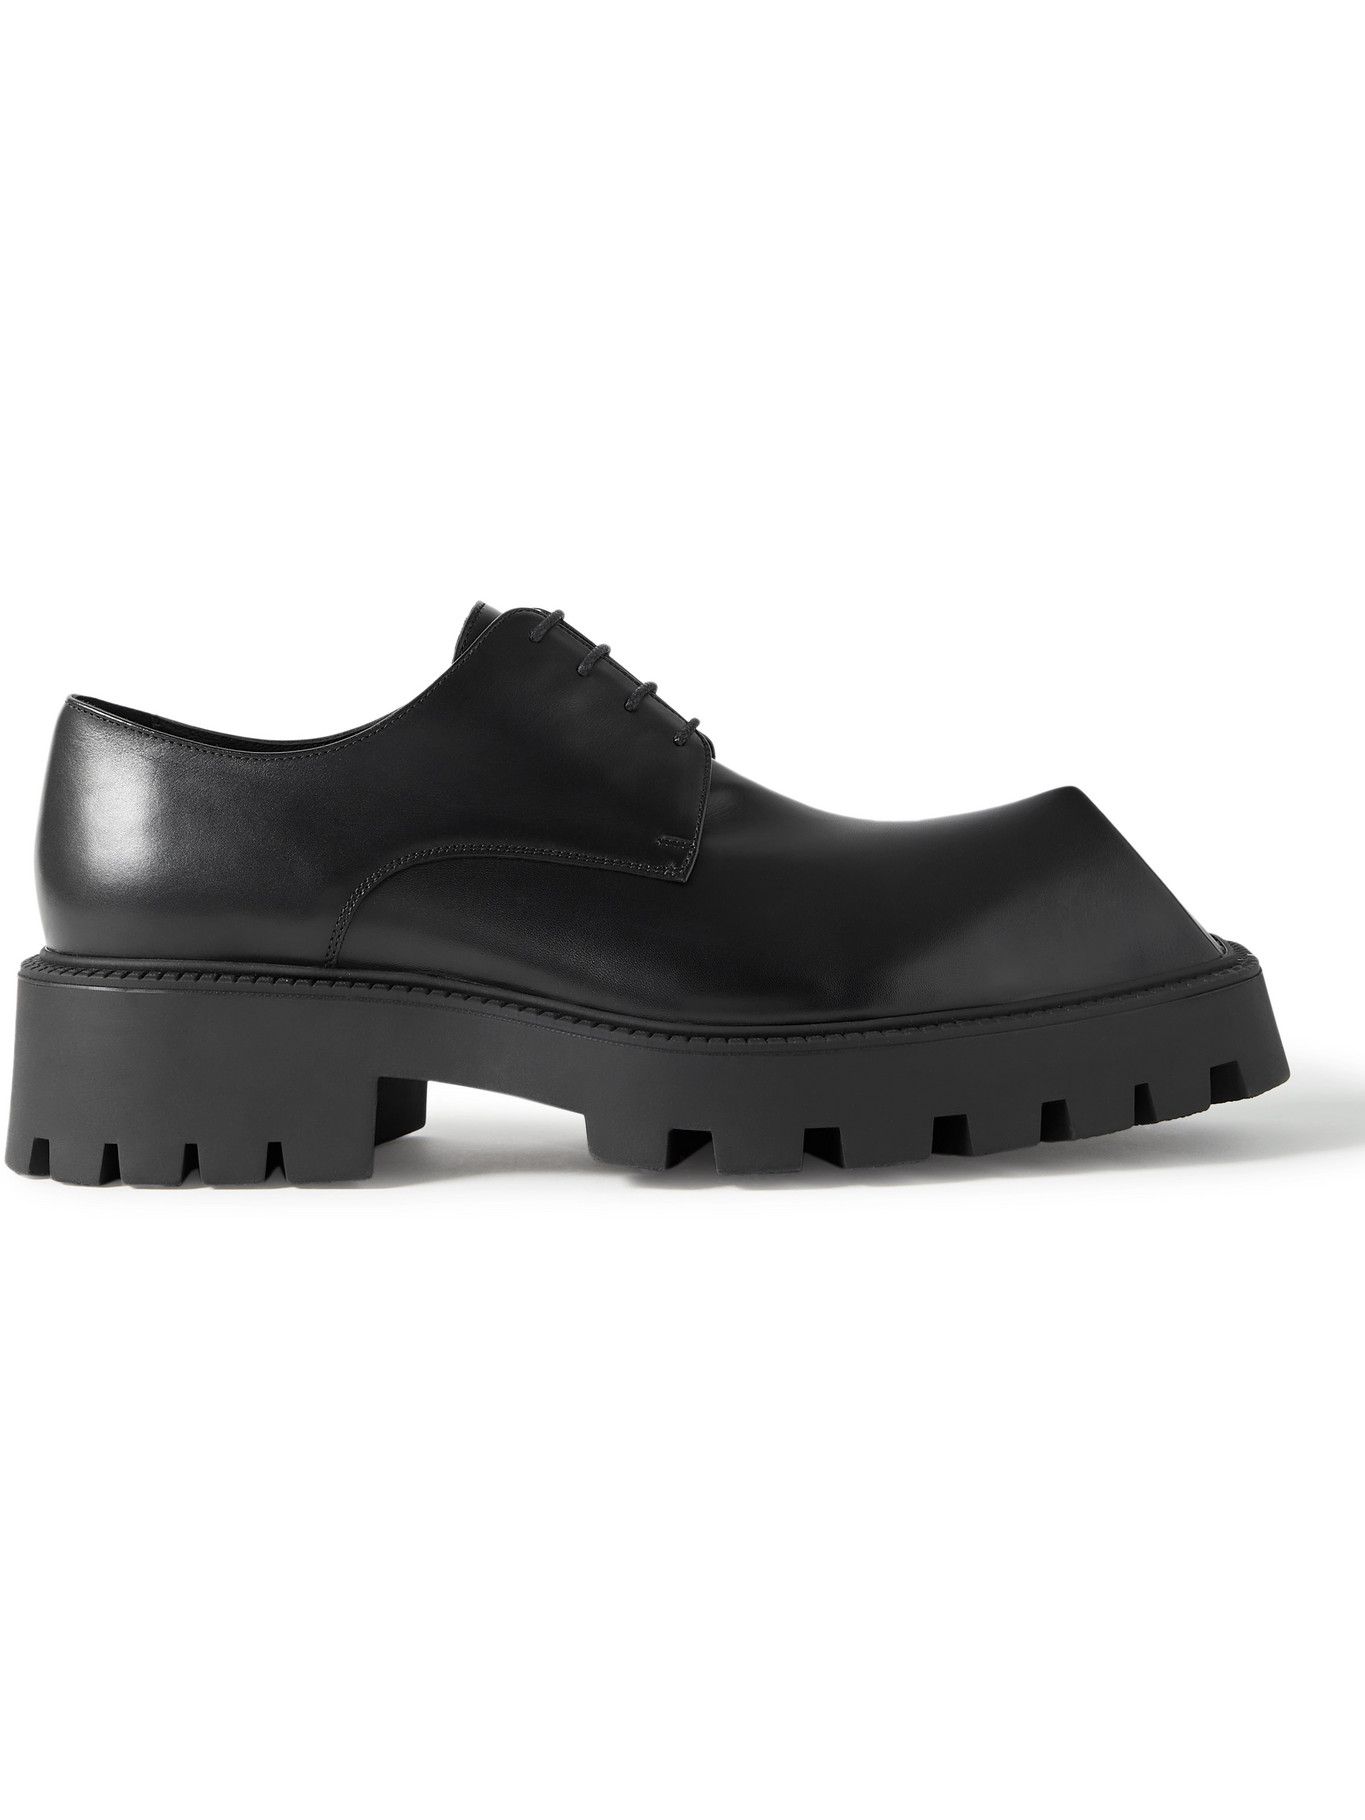 Rhino Derby Shoes in Black | Stylemi